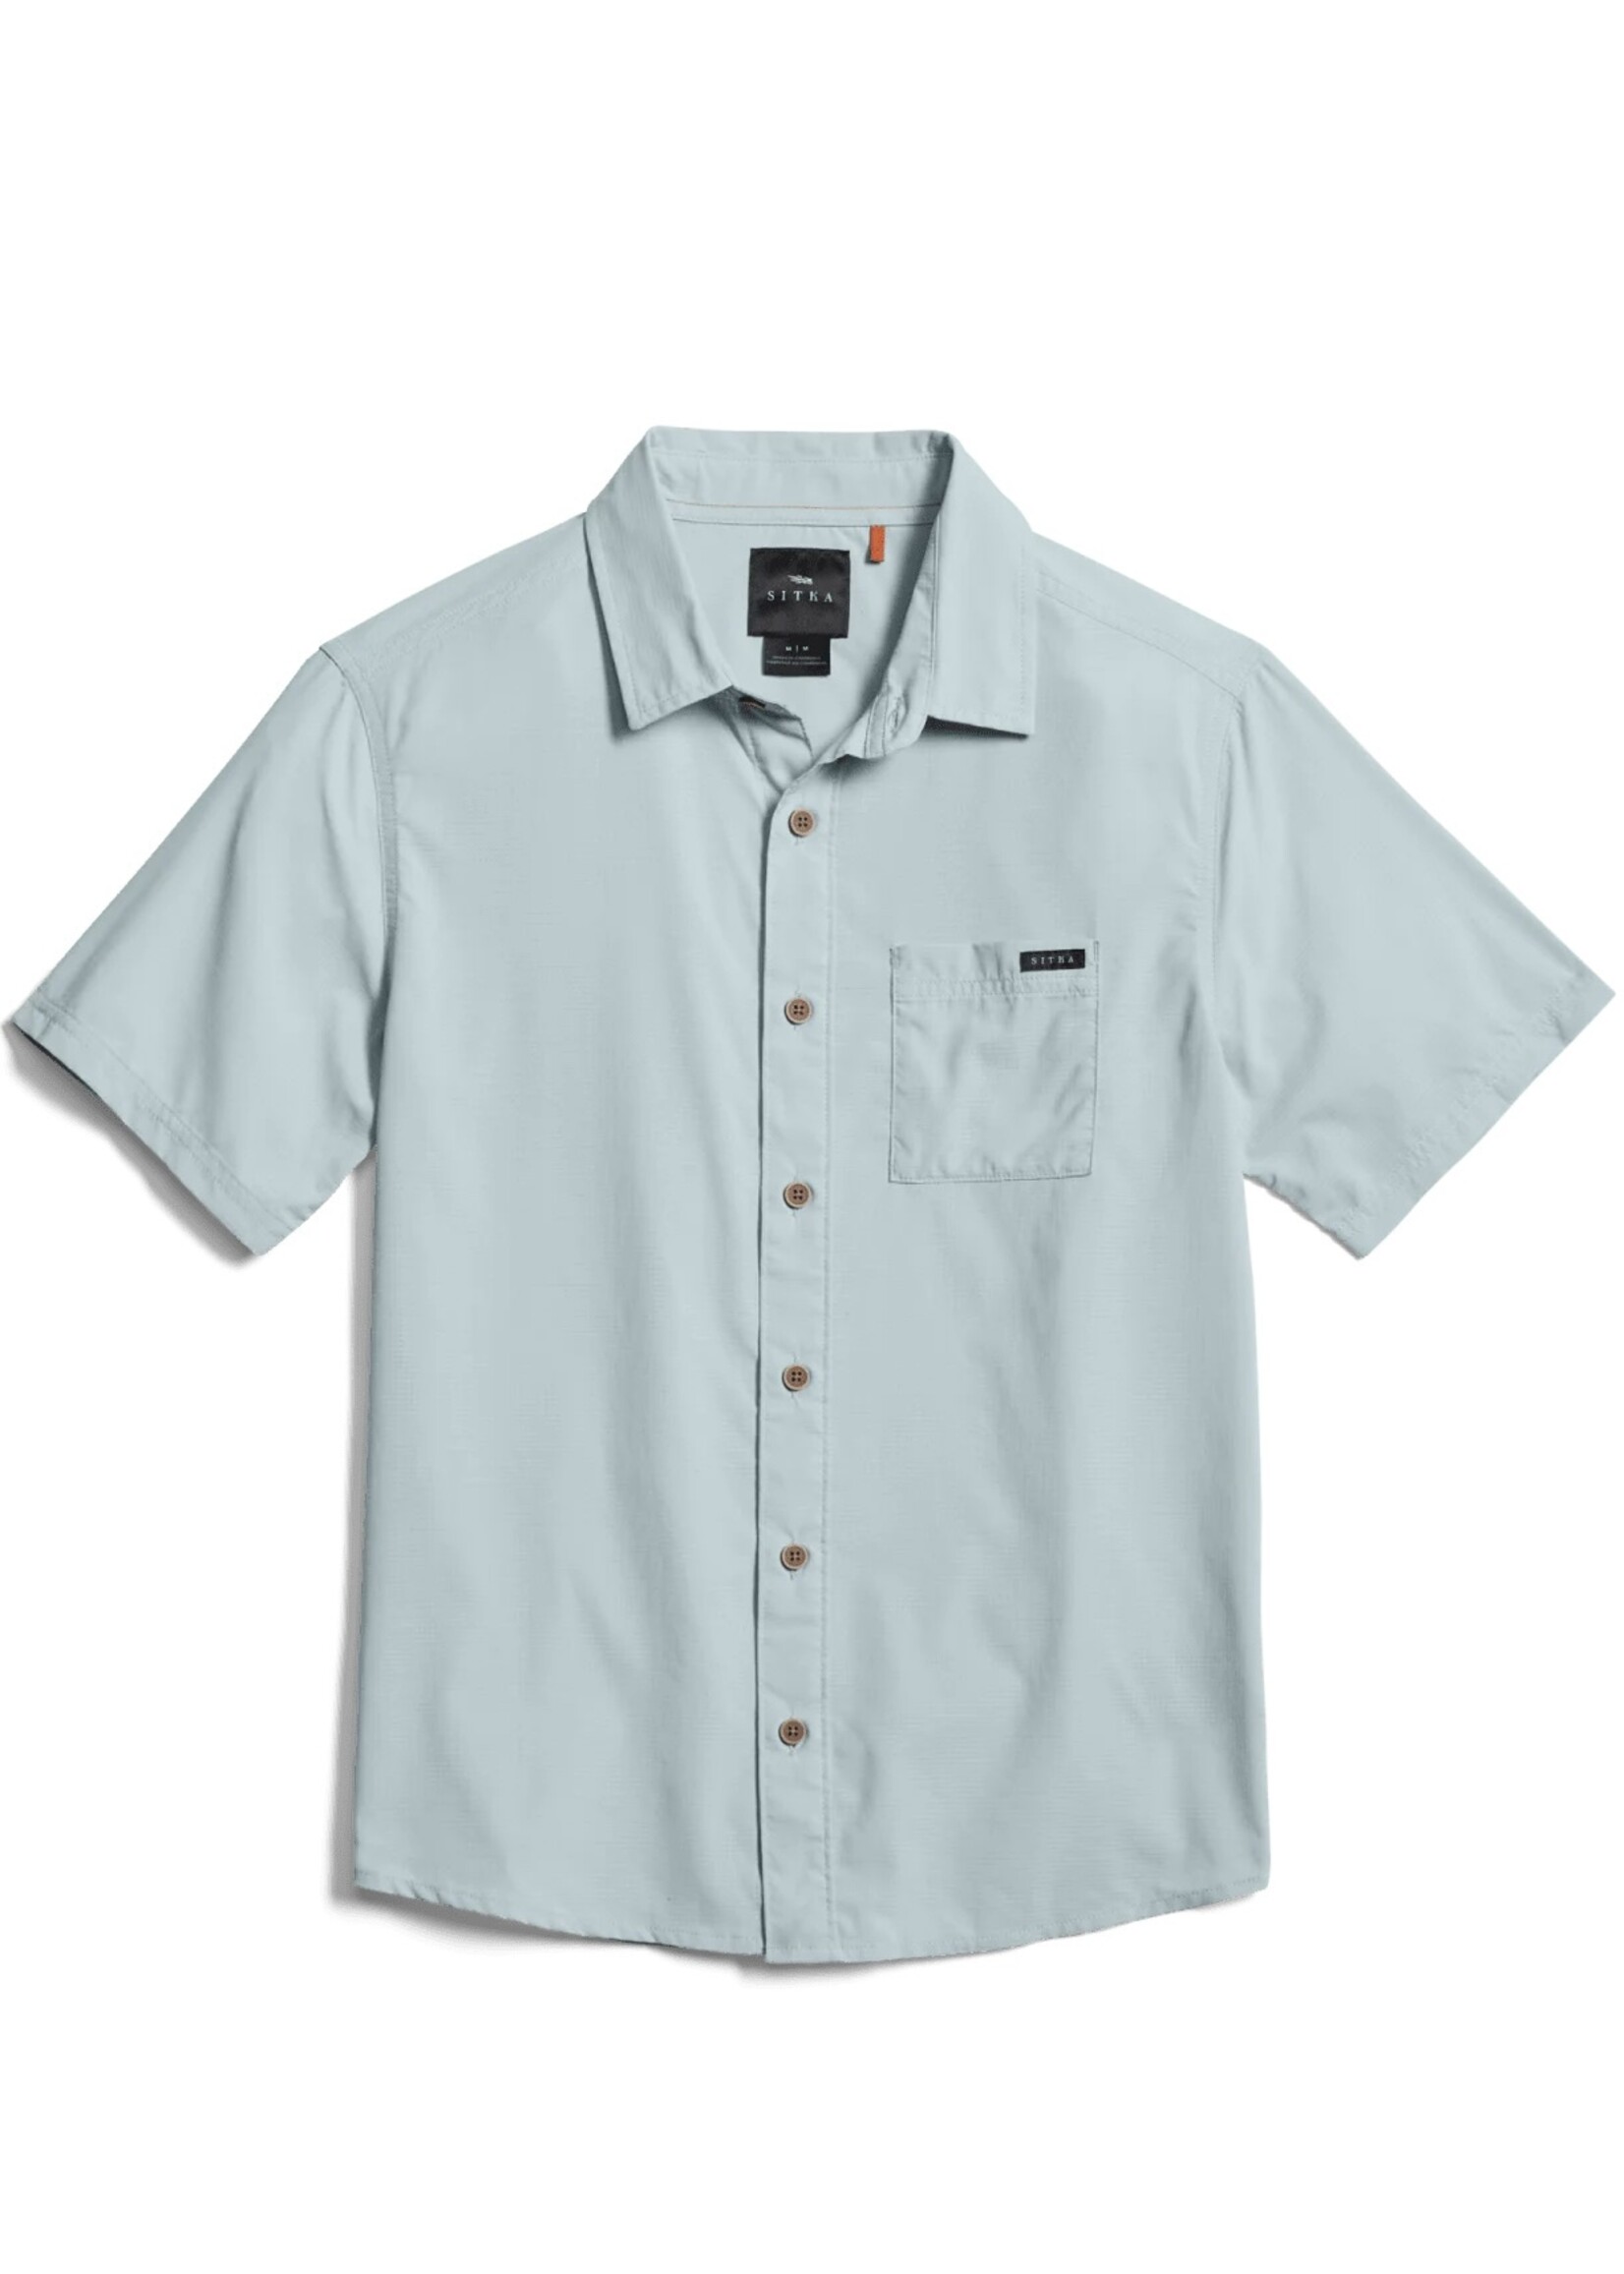 Sitka Gear Mojave SS Shirt